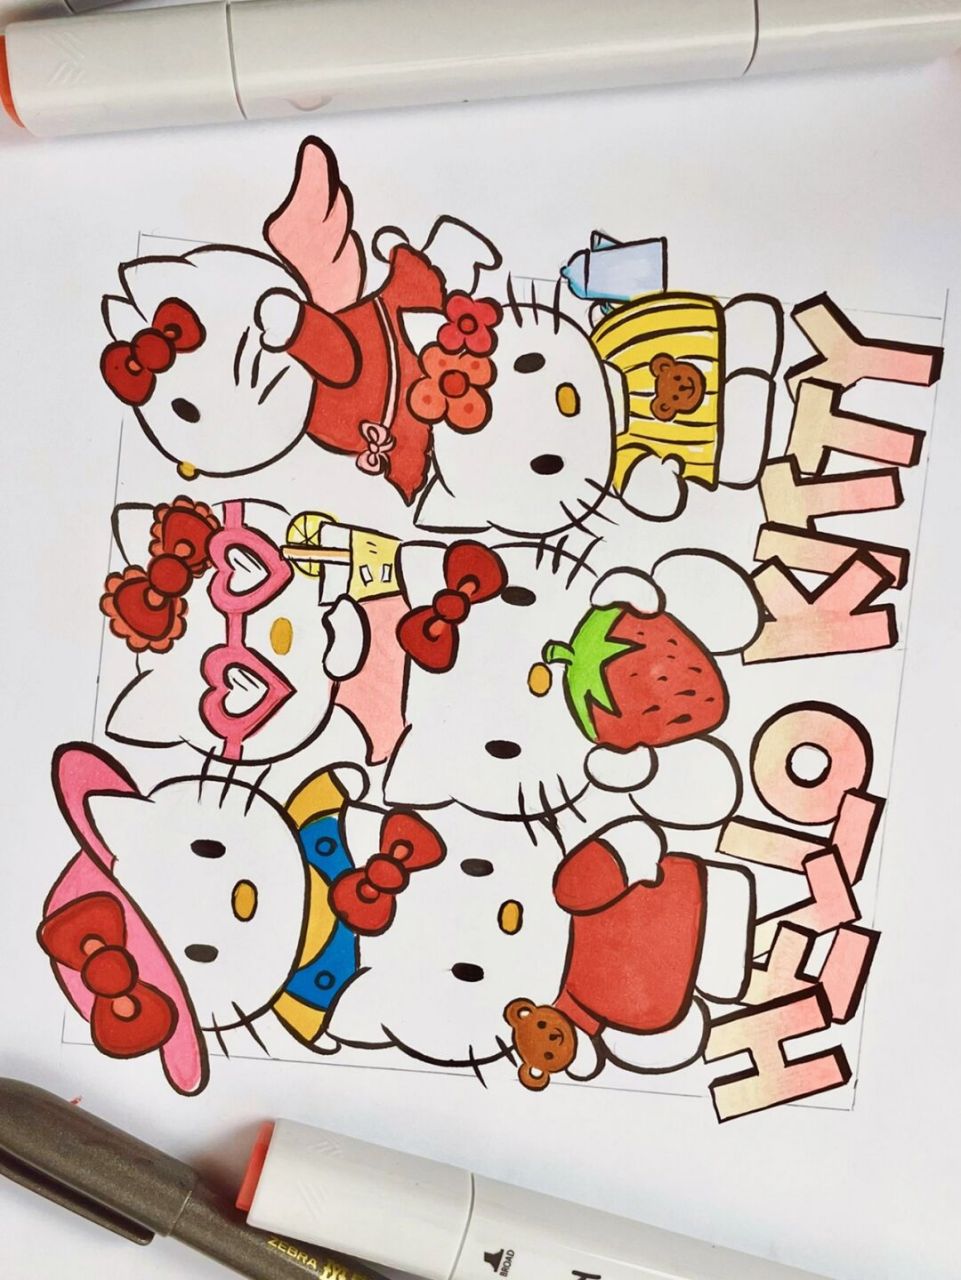 kitty猫简笔画彩色图片